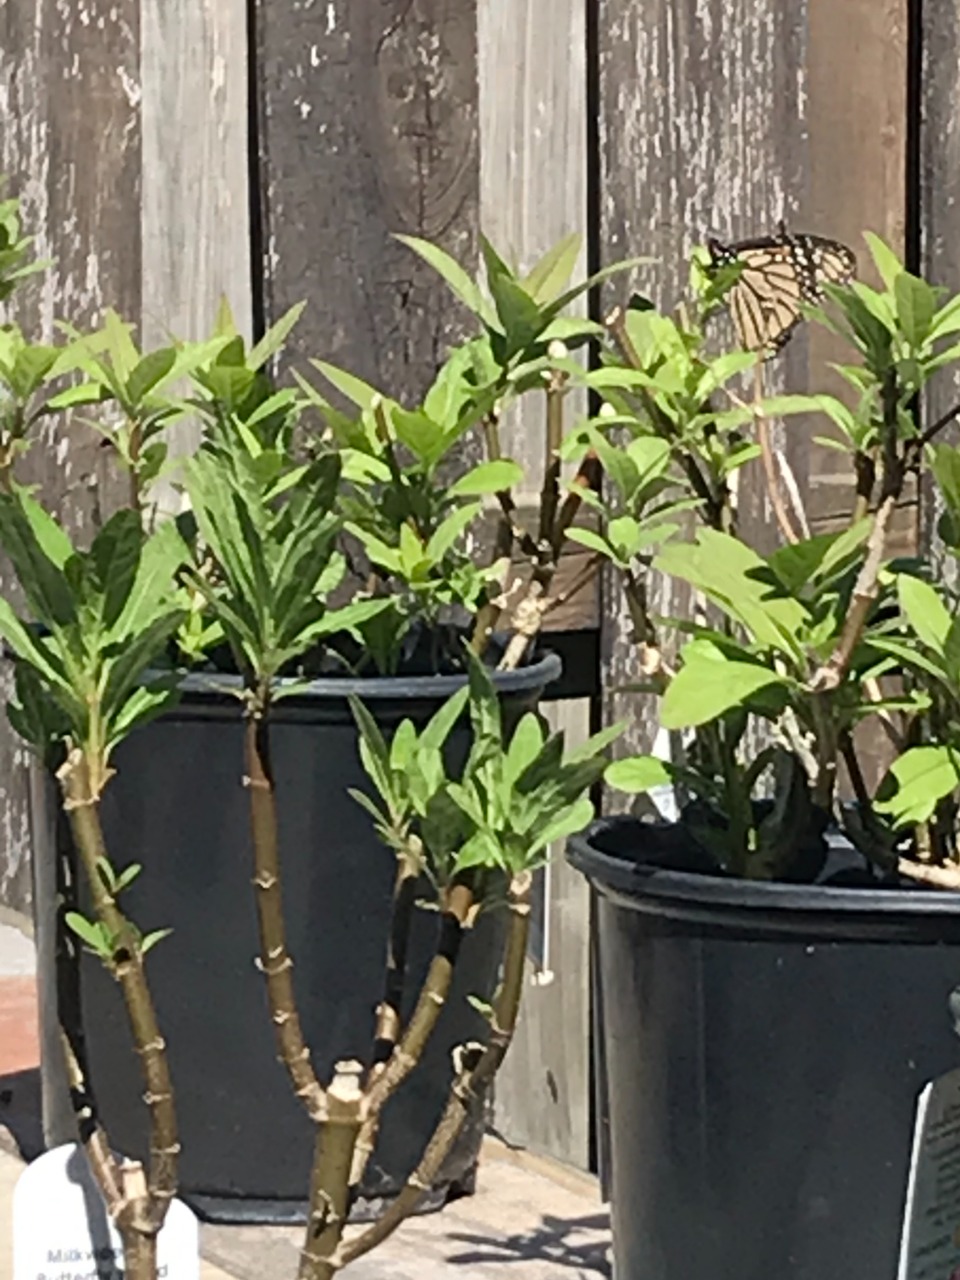 monarch seen near potted plants